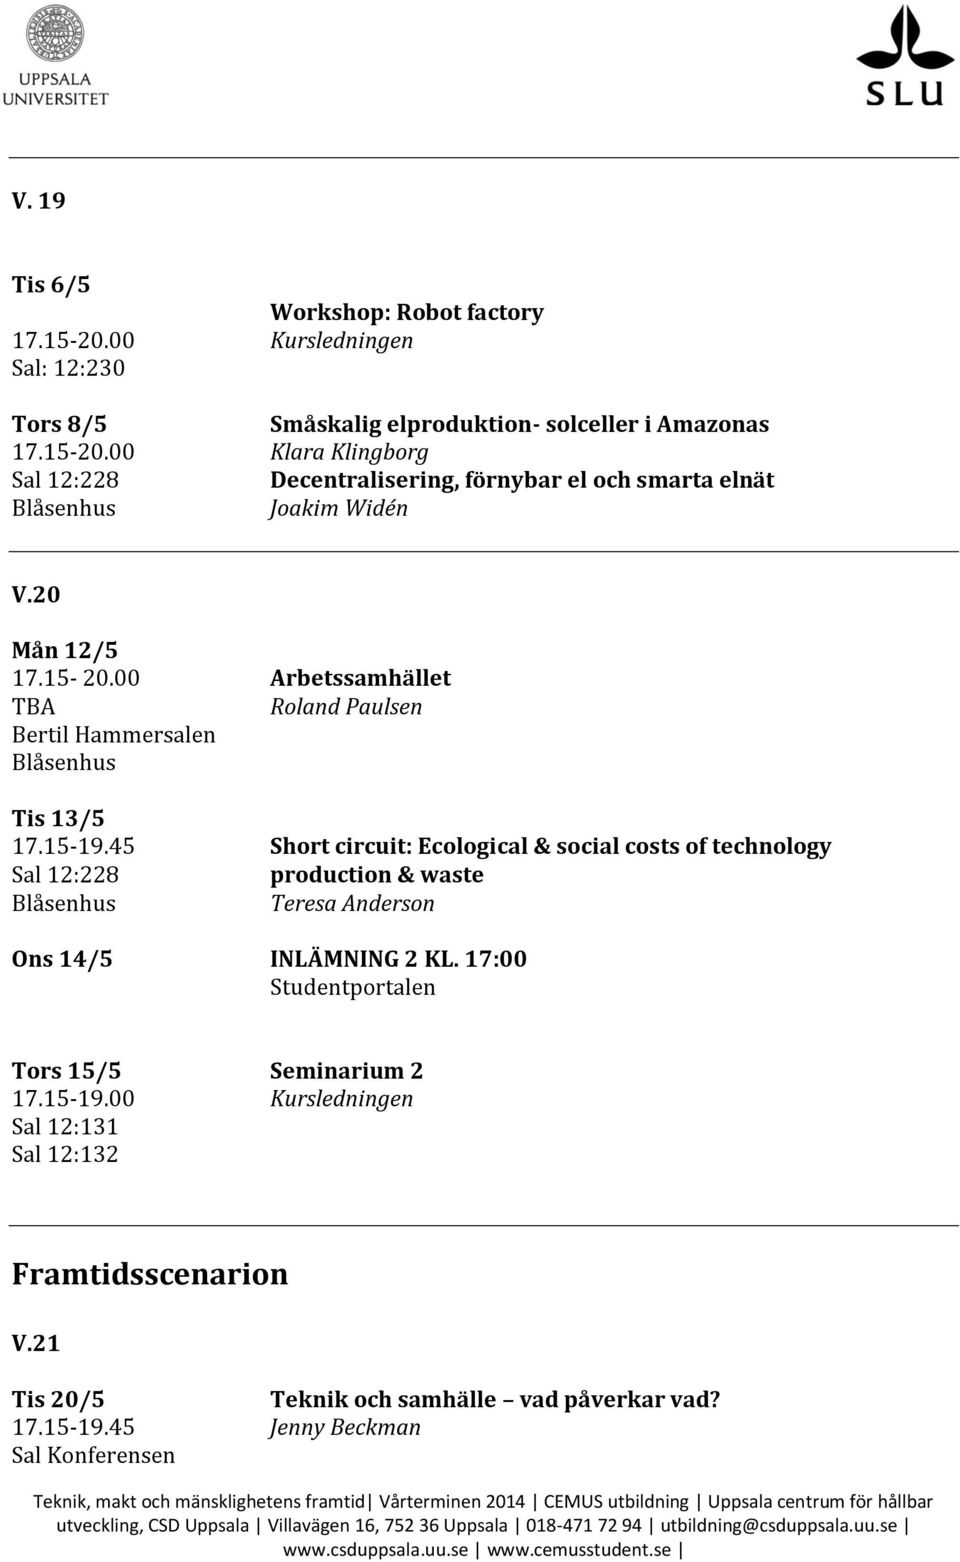 45 Short circuit: Ecological & social costs of technology Sal 12:228 production & waste Blåsenhus Teresa Anderson Ons 14/5 INLÄMNING 2 KL. 17:00 Studentportalen Tors 15/5 Seminarium 2 17.15-19.